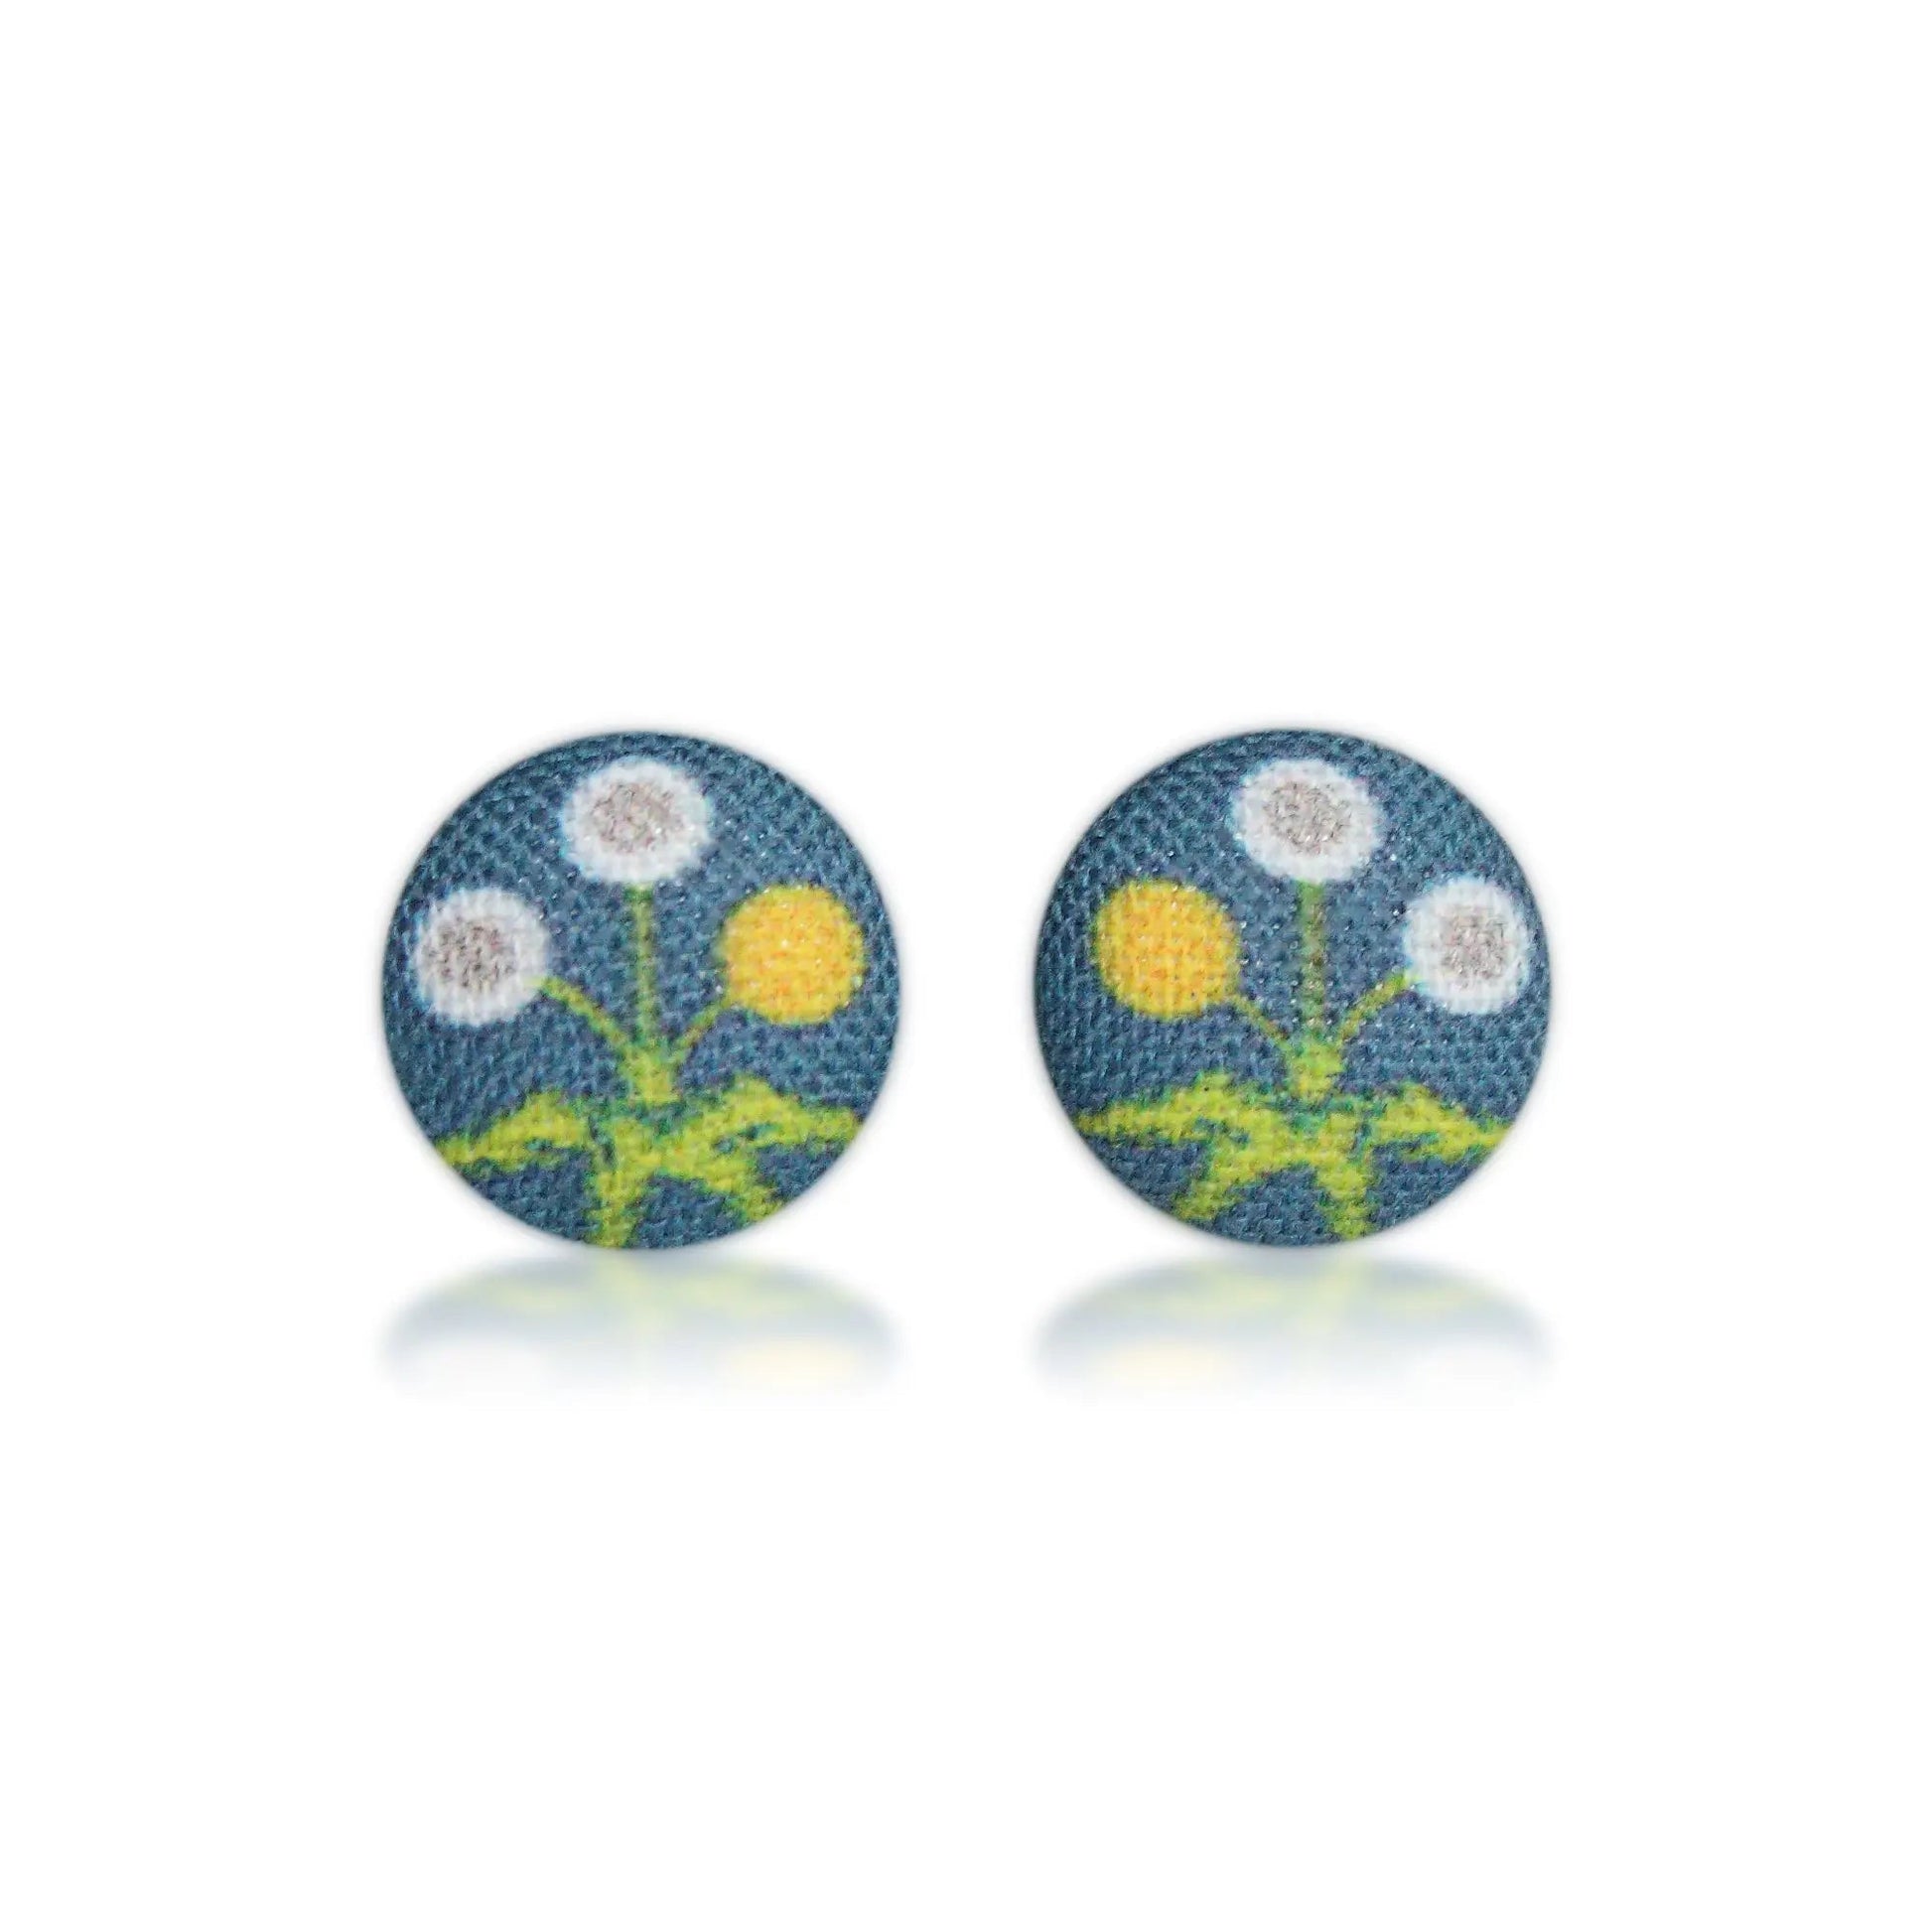 Pretty Dandelions Fabric Button Earrings | Handmade in the US